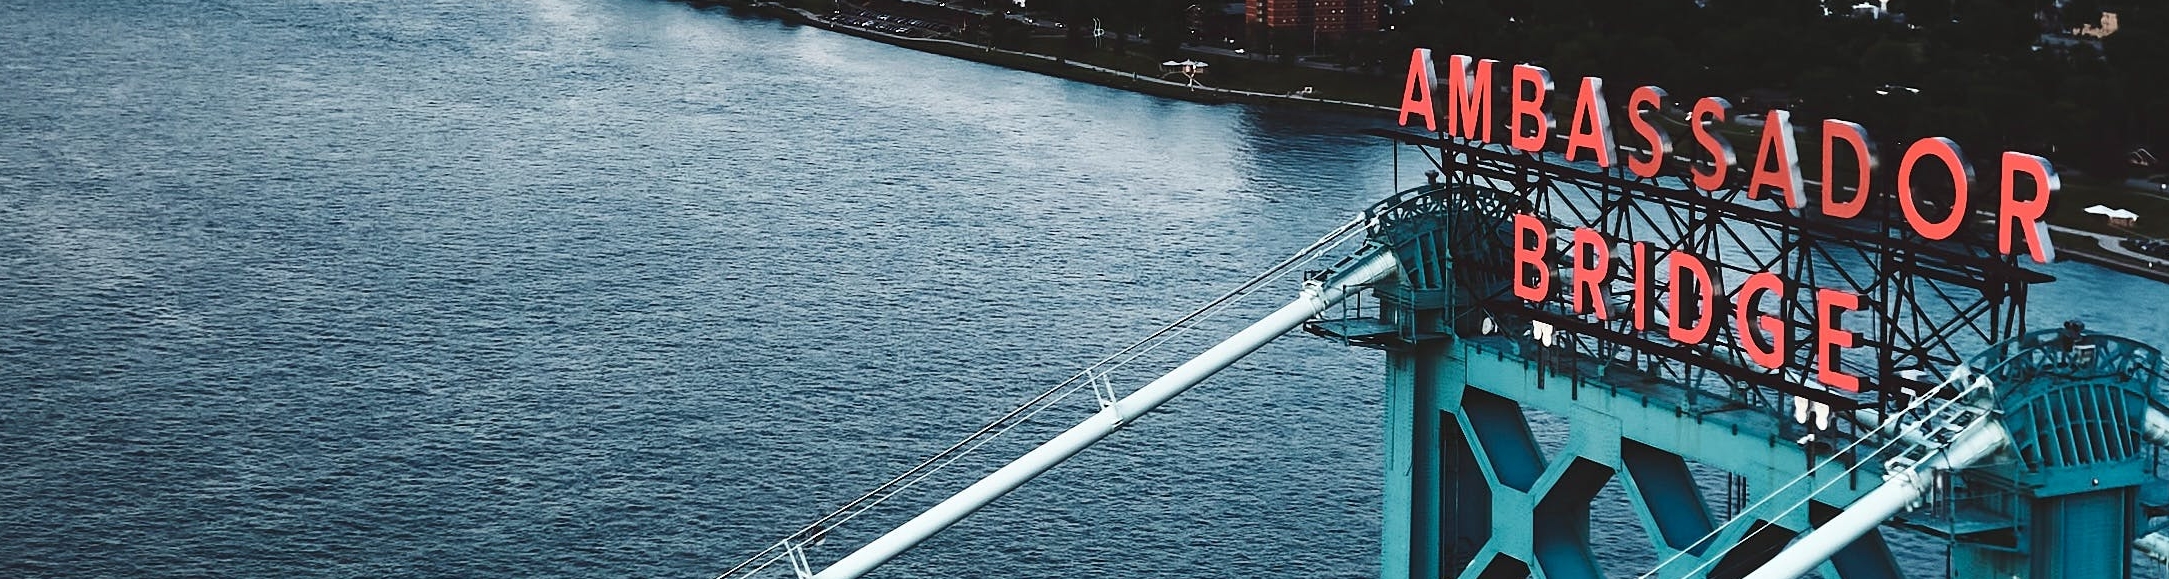 image of Ambassador Bridge between the US and Canada